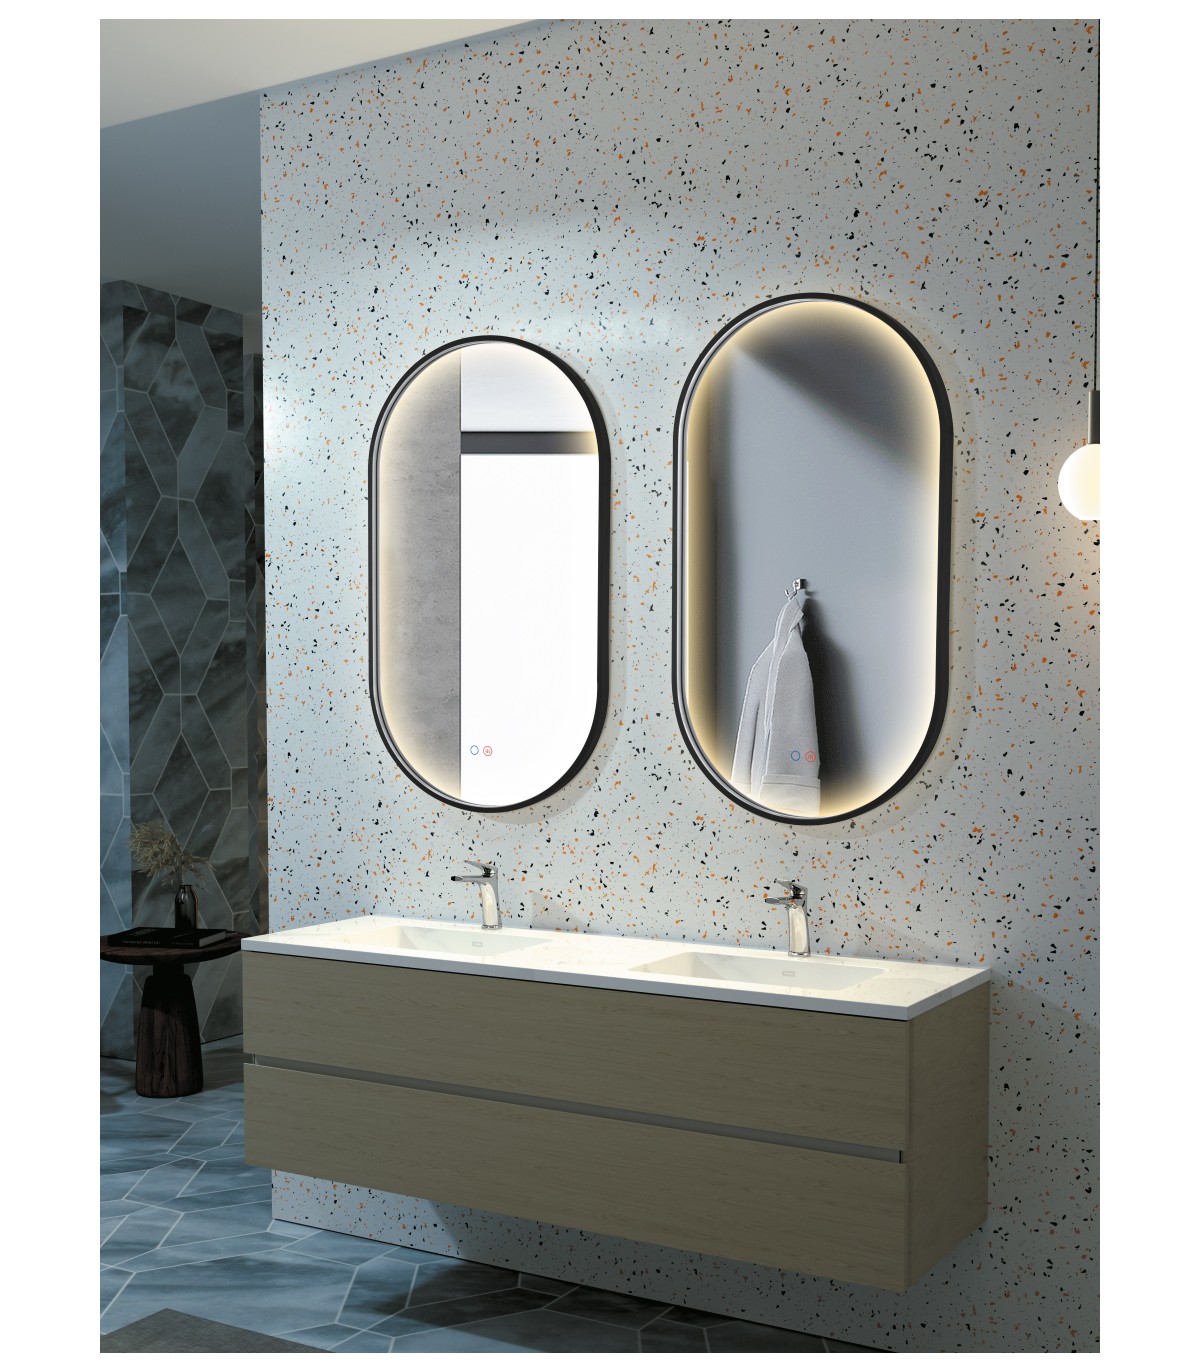 Espejos led para baño, Espejo retroiluminado Redondo Marca Ledimex